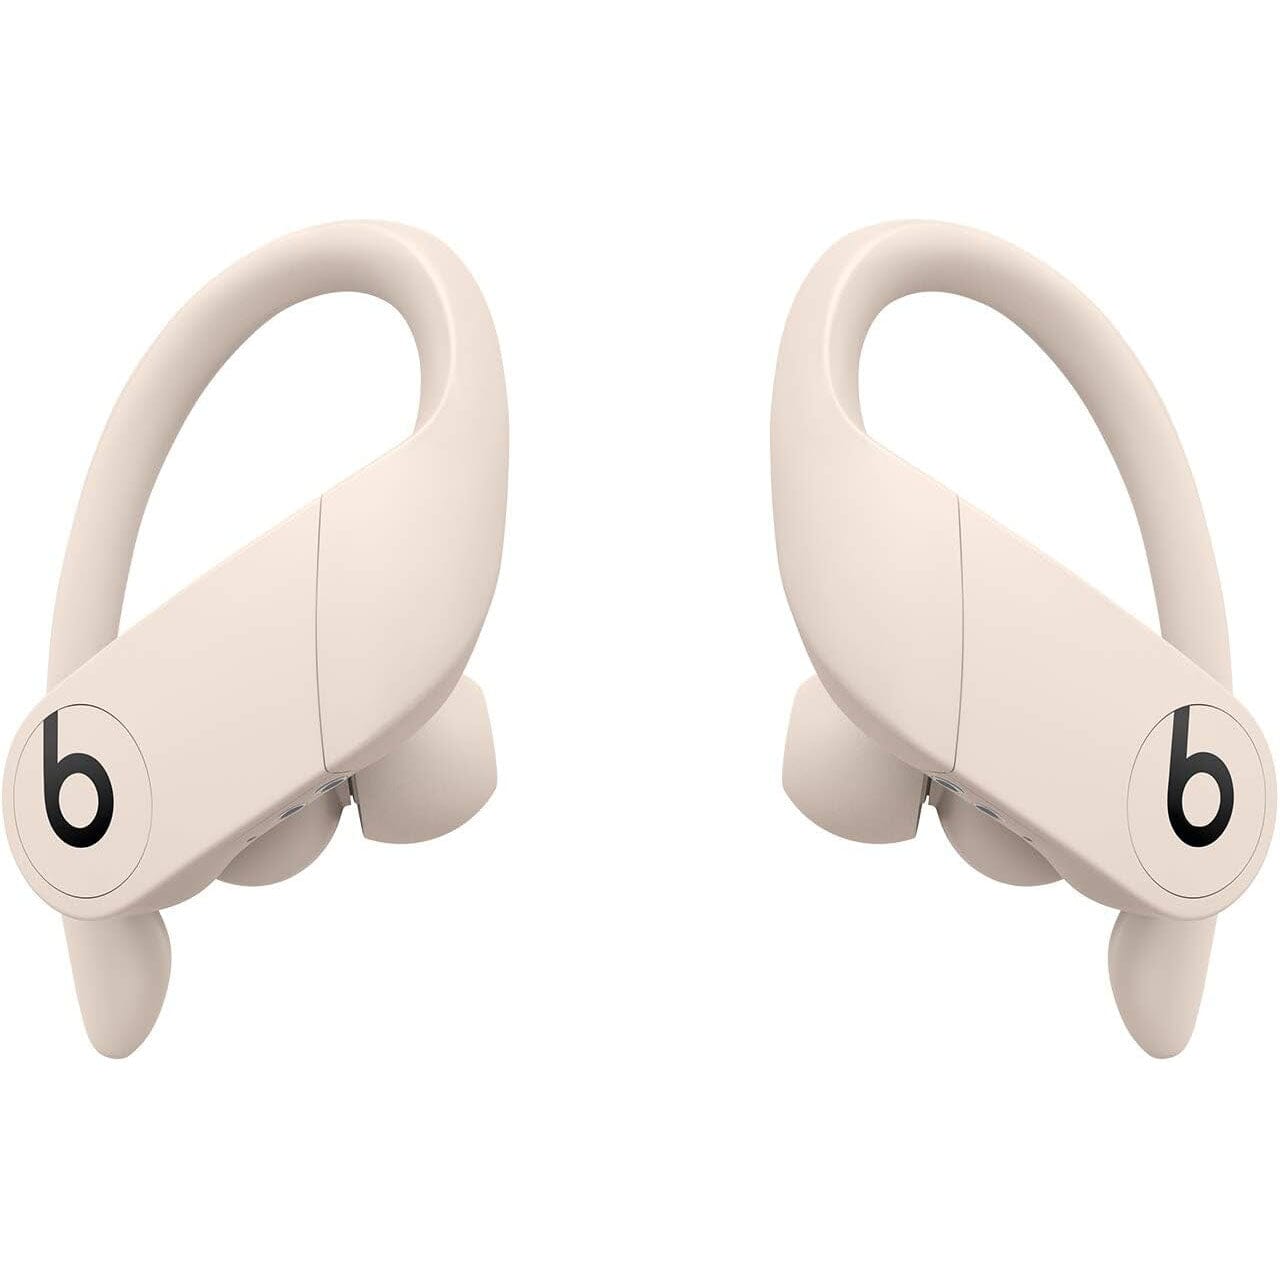 Beats Powerbeats Pro Wireless Earbuds - Ivory (Refurbished)